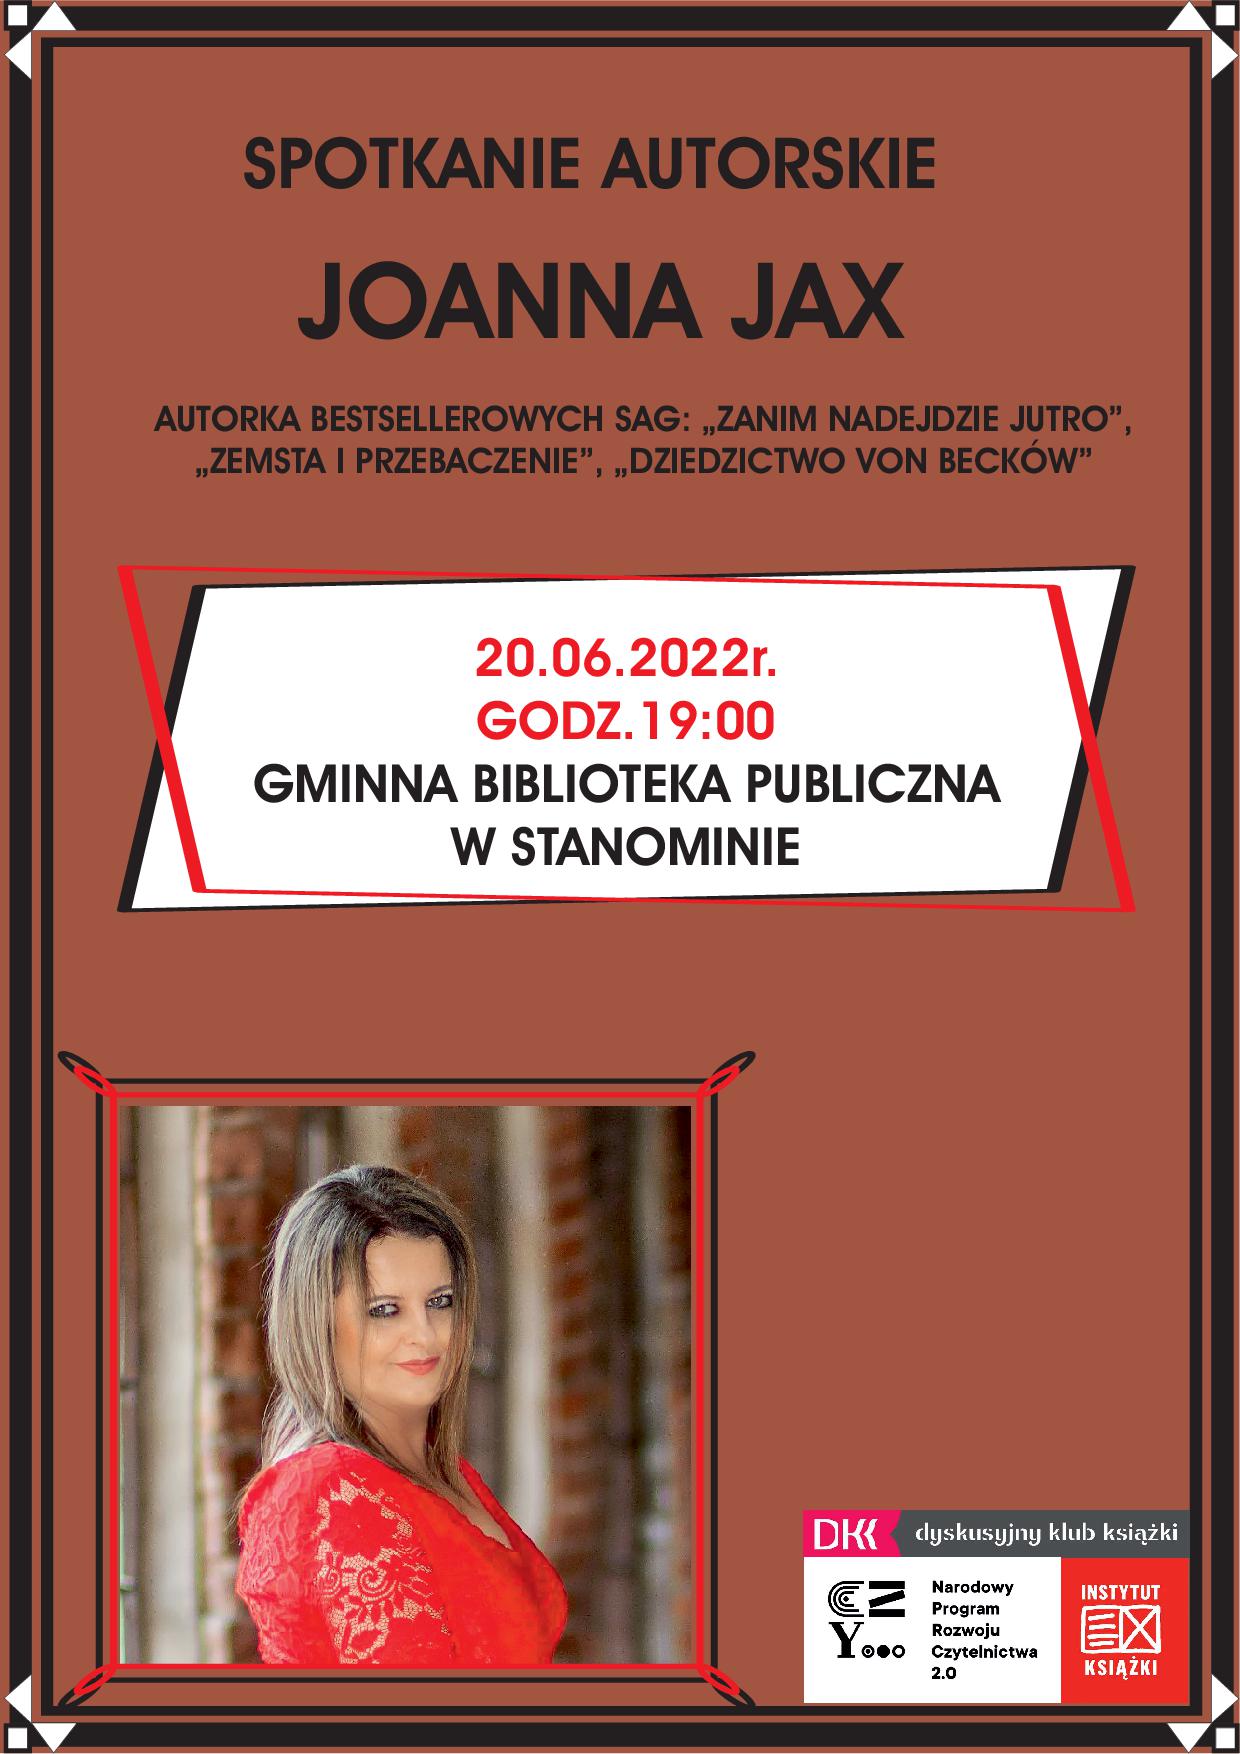 Spotkanie autorskie Joanna Jax